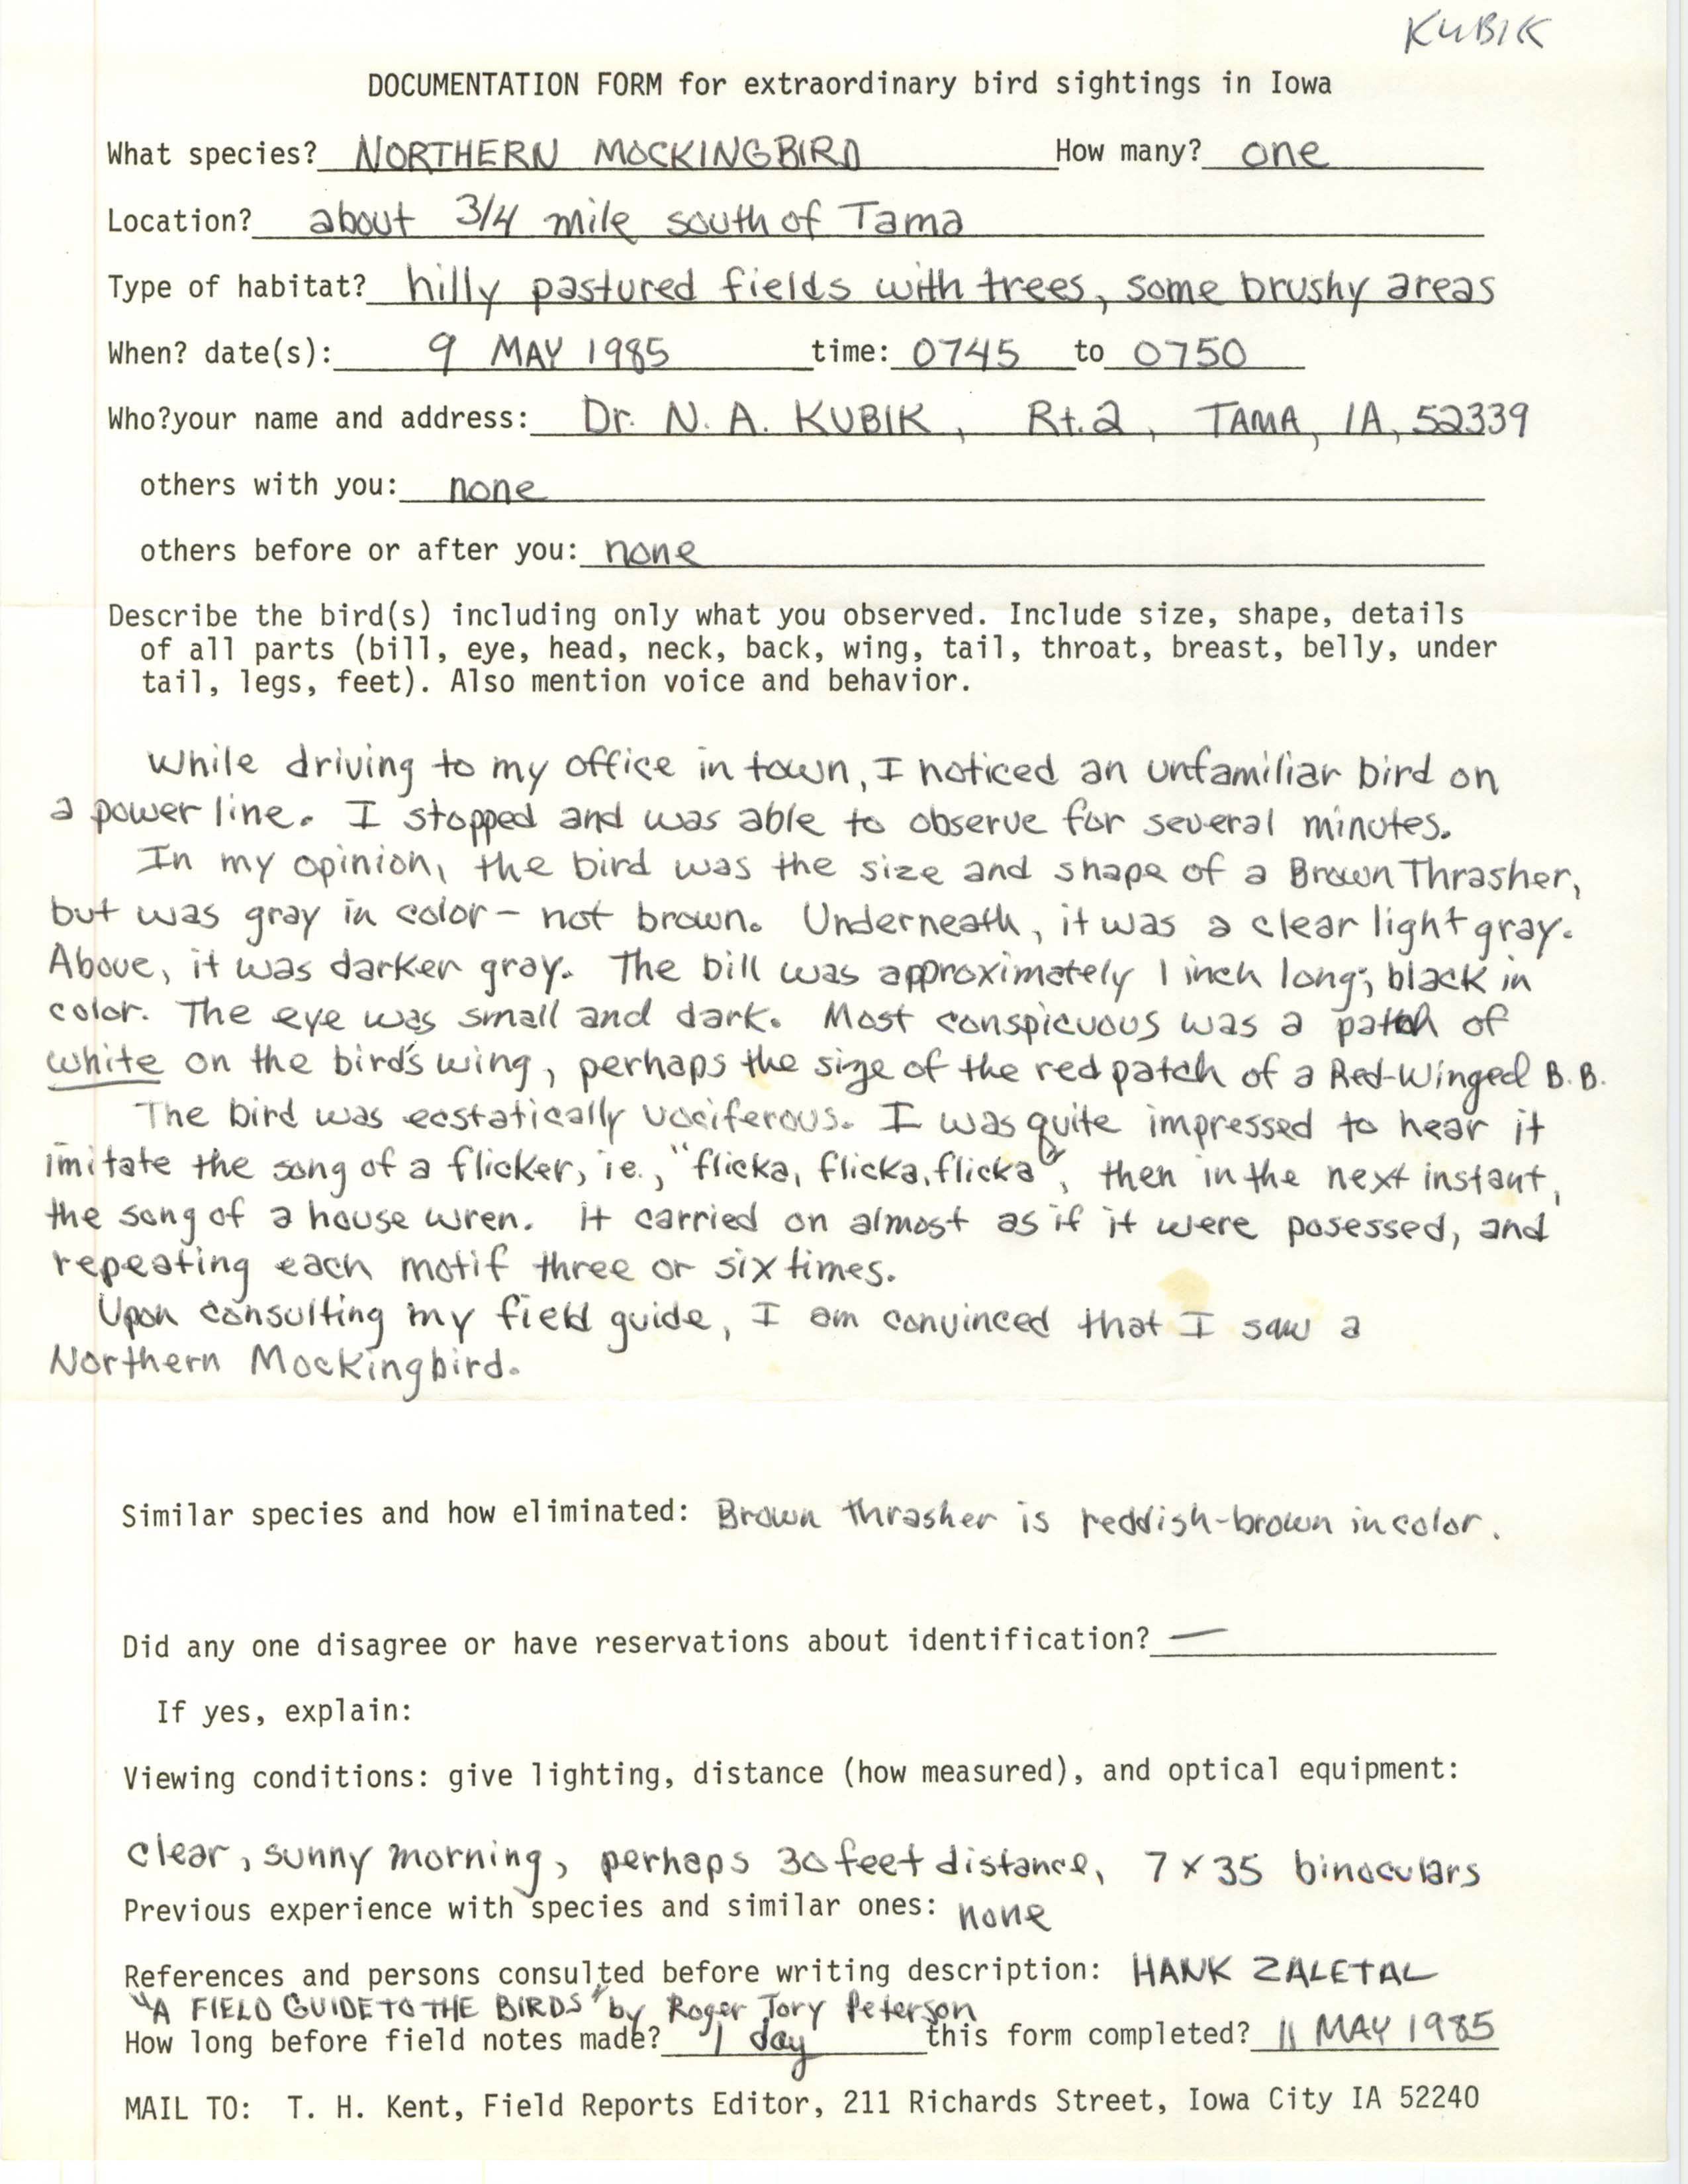 Rare bird documentation form for Northern Mockingbird south of Tama, 1985